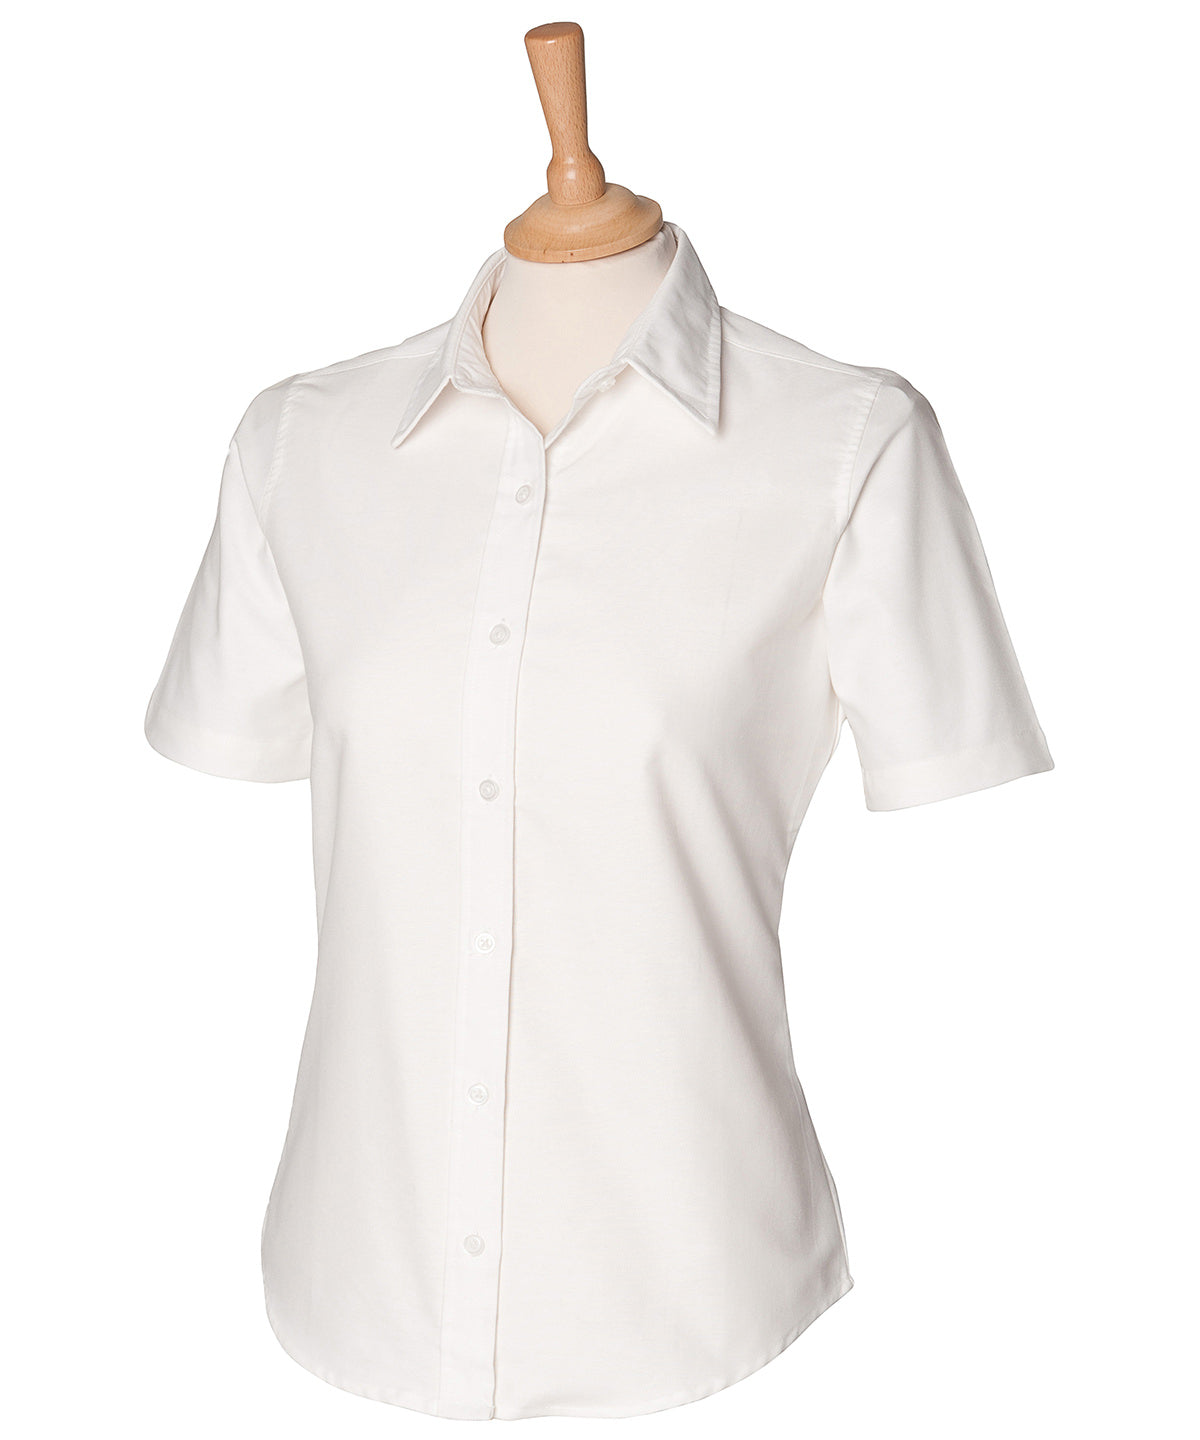 Bolir - Women's Short Sleeve Classic Oxford Shirt